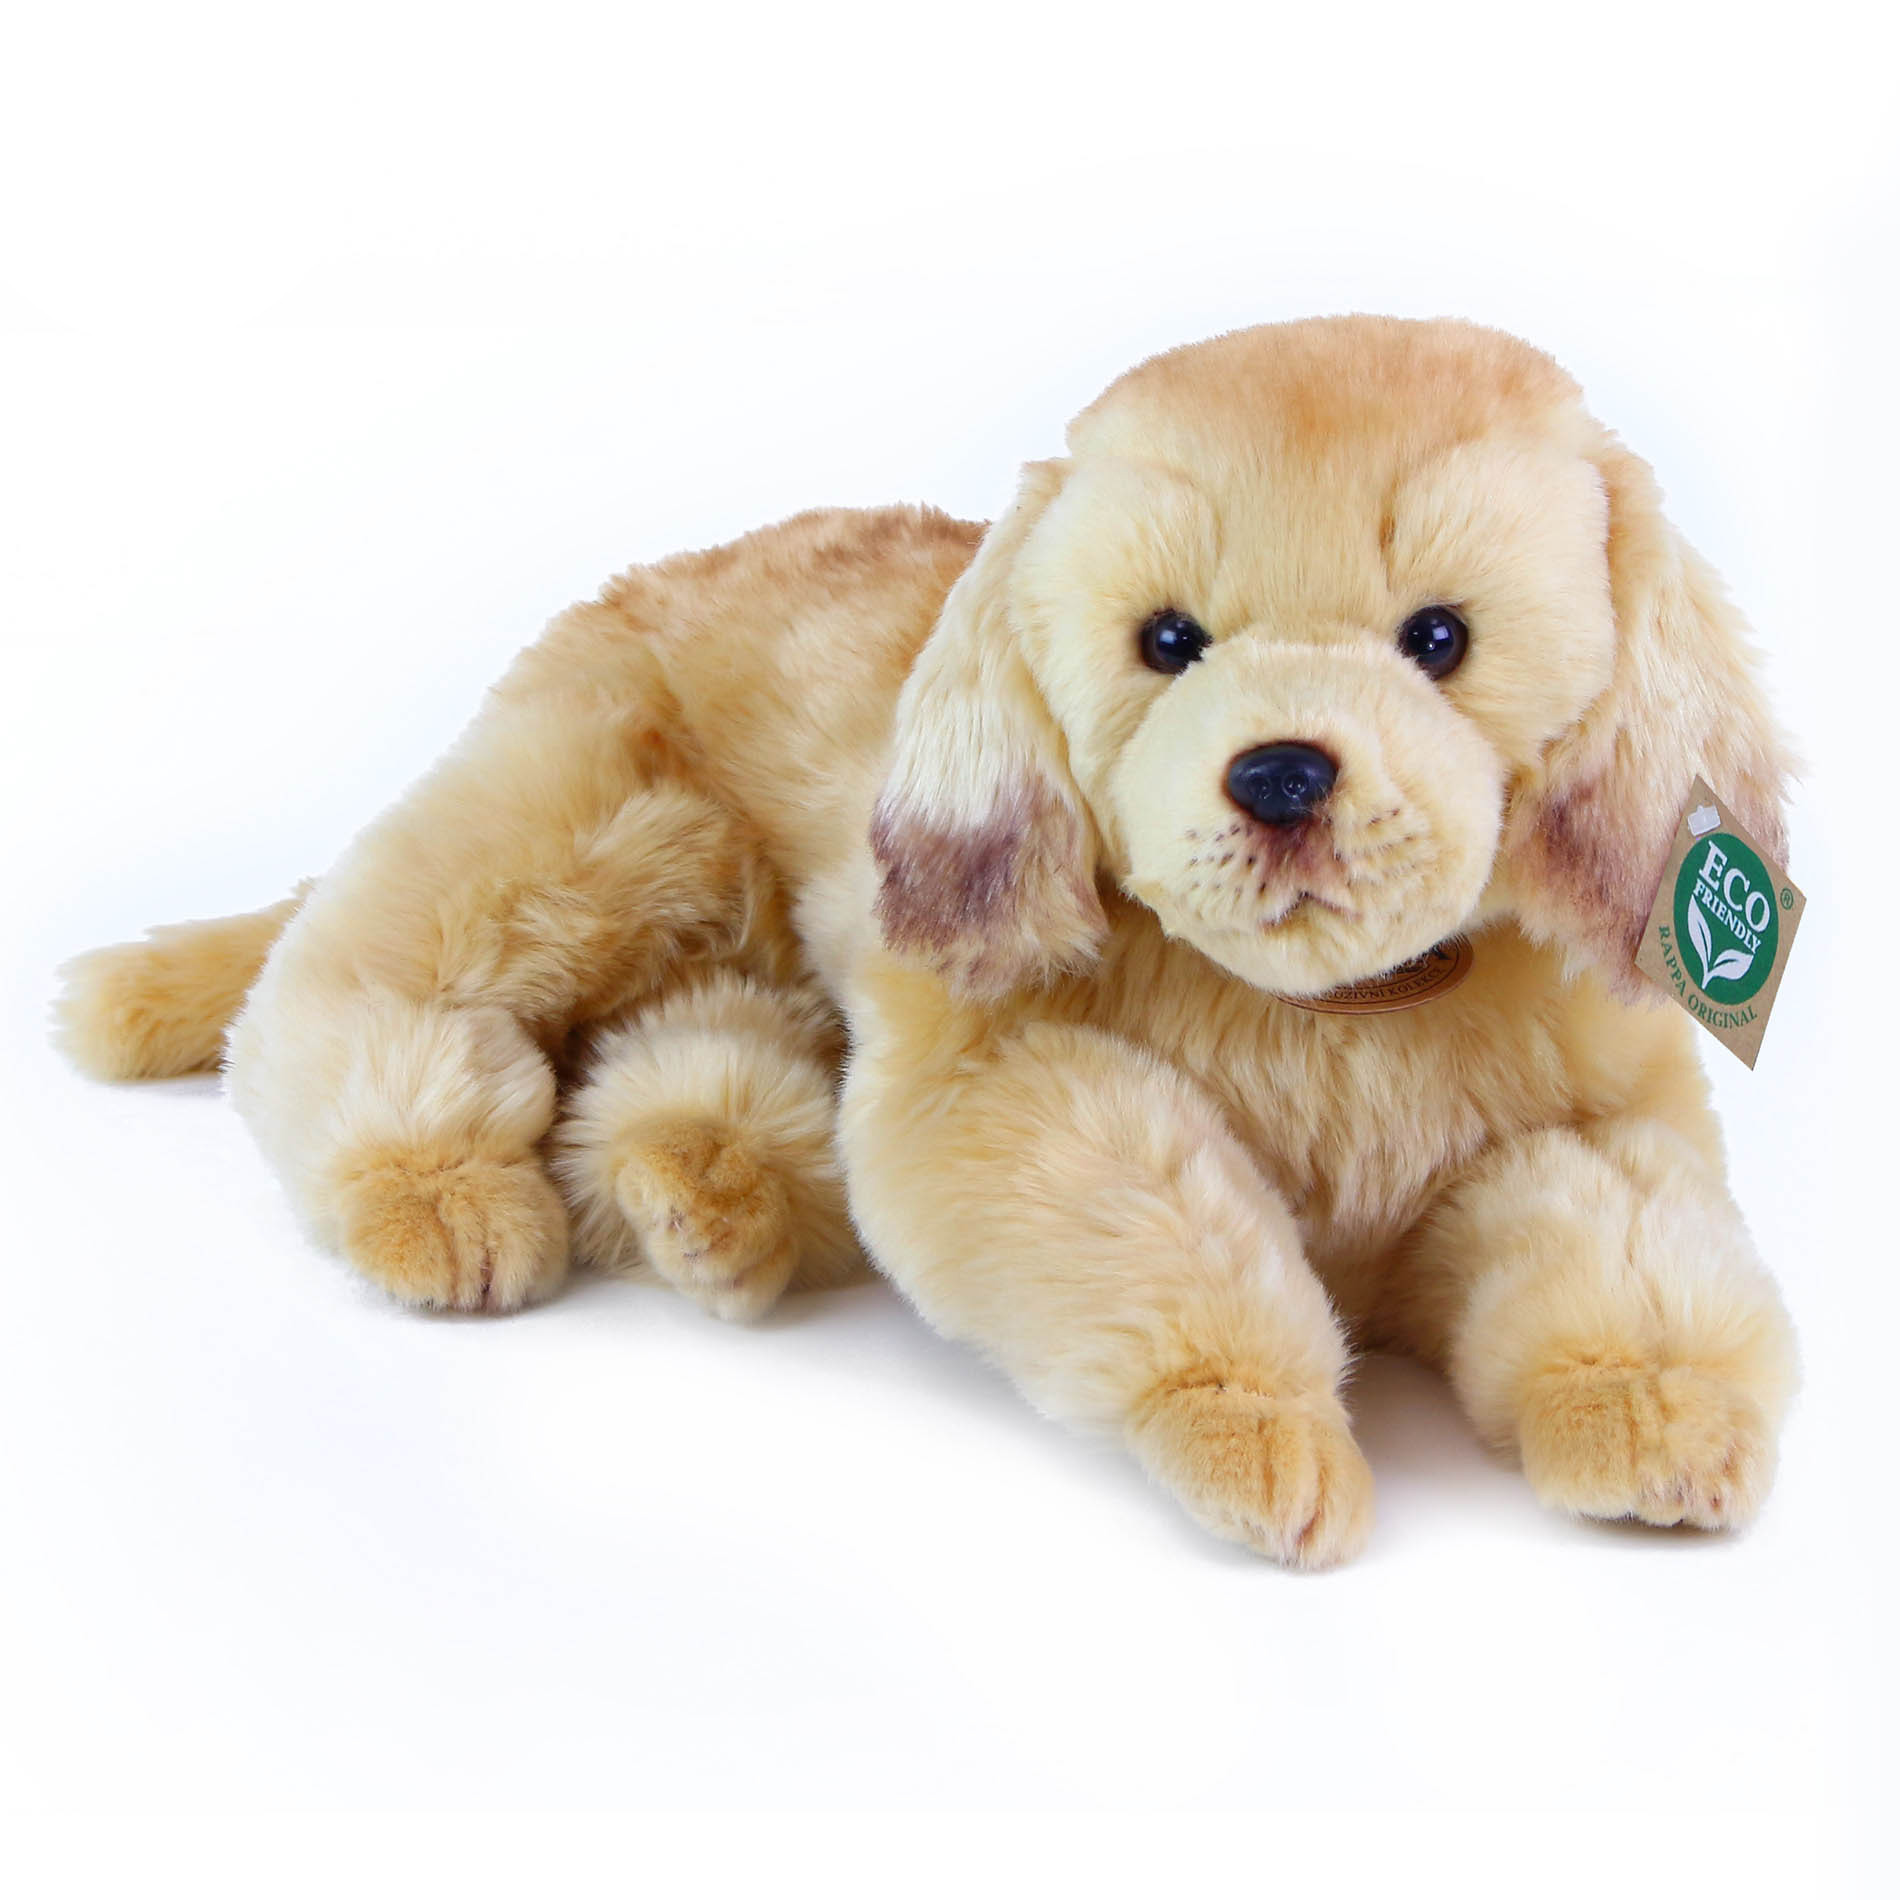 Plyšový pes zlatý retrívr ležící 32 cm ECO-FRIENDLY